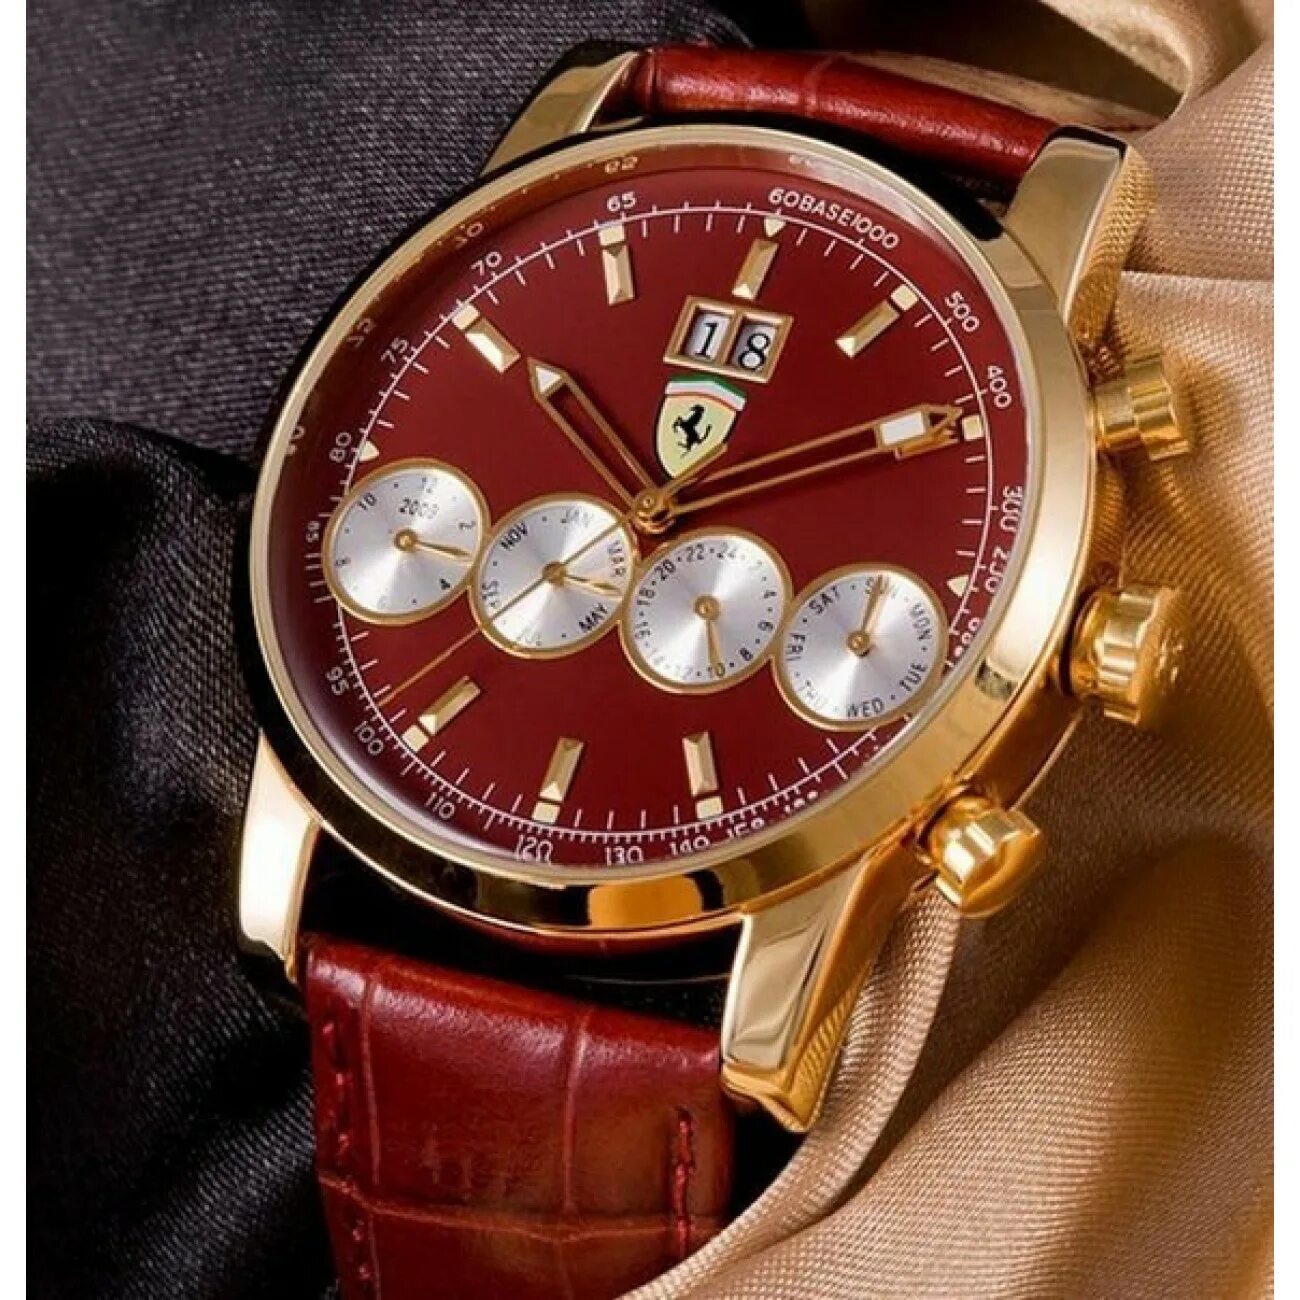 Часы Ferrari Maranello кварц. Часы Ferrari Maranello Chronograph. Мужские часы Ferrari Geneve 250. Часы механические Феррари 31041. Магазин часов на красной